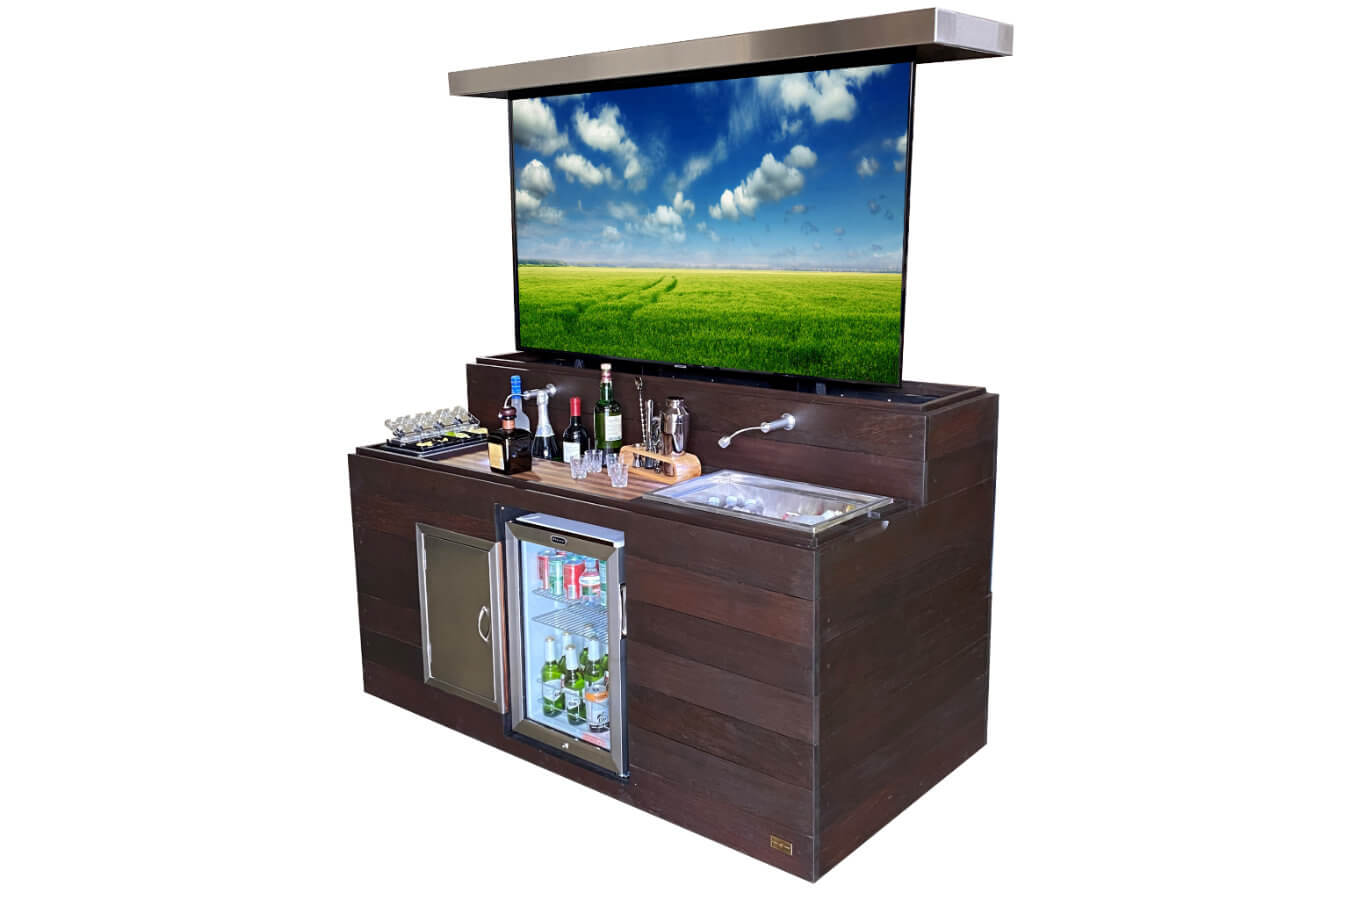 Cabinet Tronix Outdoor backyard waterproof bar TV and fridge movable cabinet island